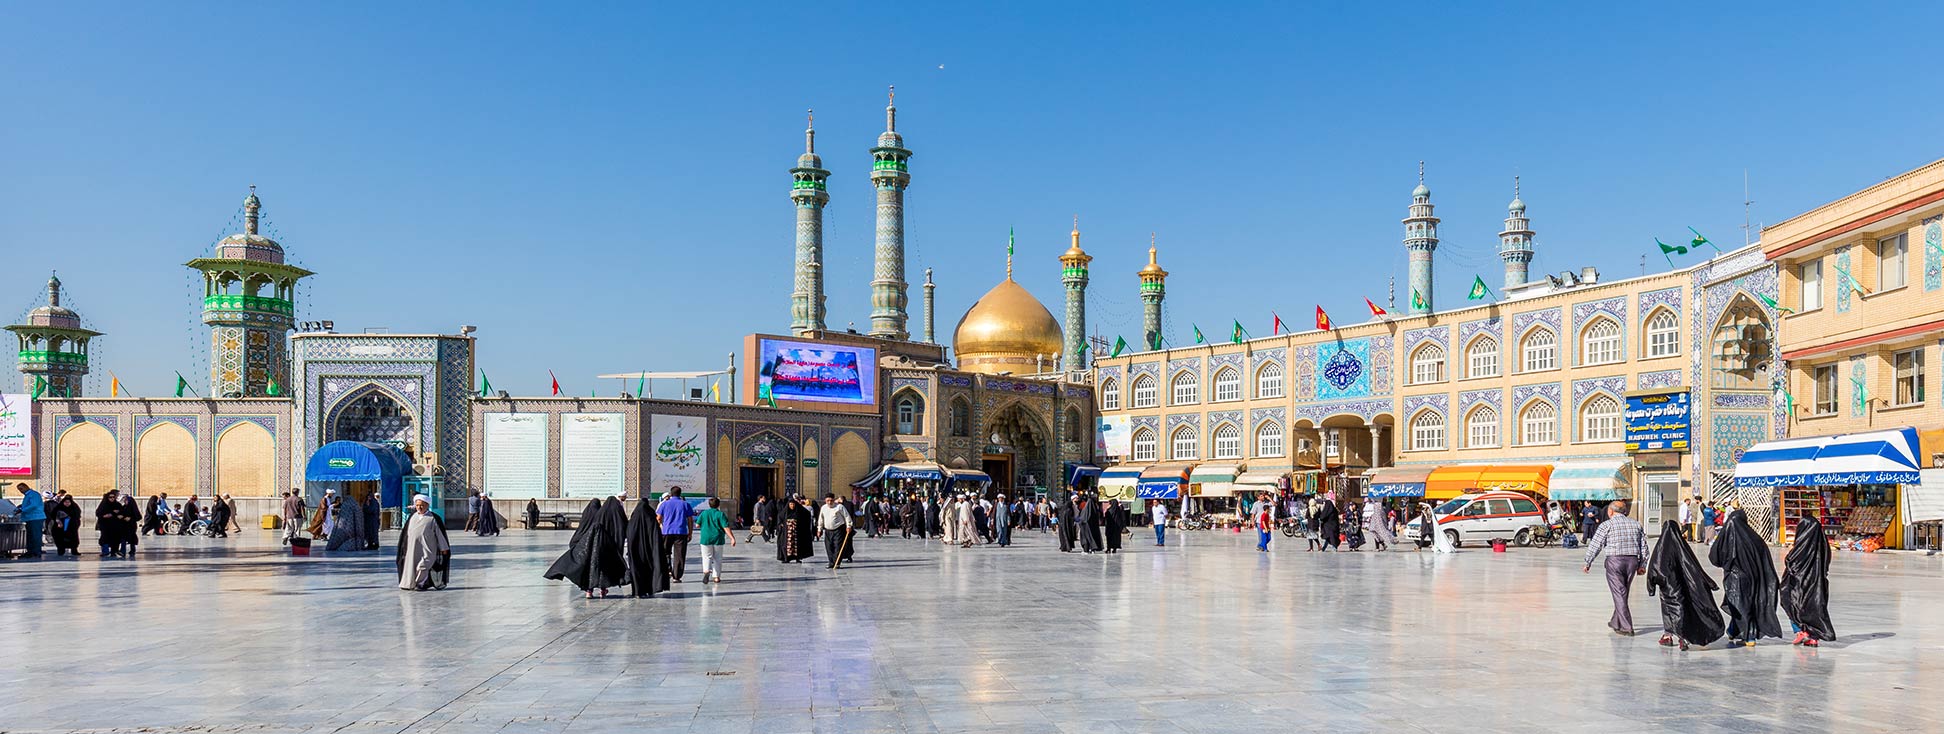 The Fatima Masumeh Shrine in the city of Qom in Iran